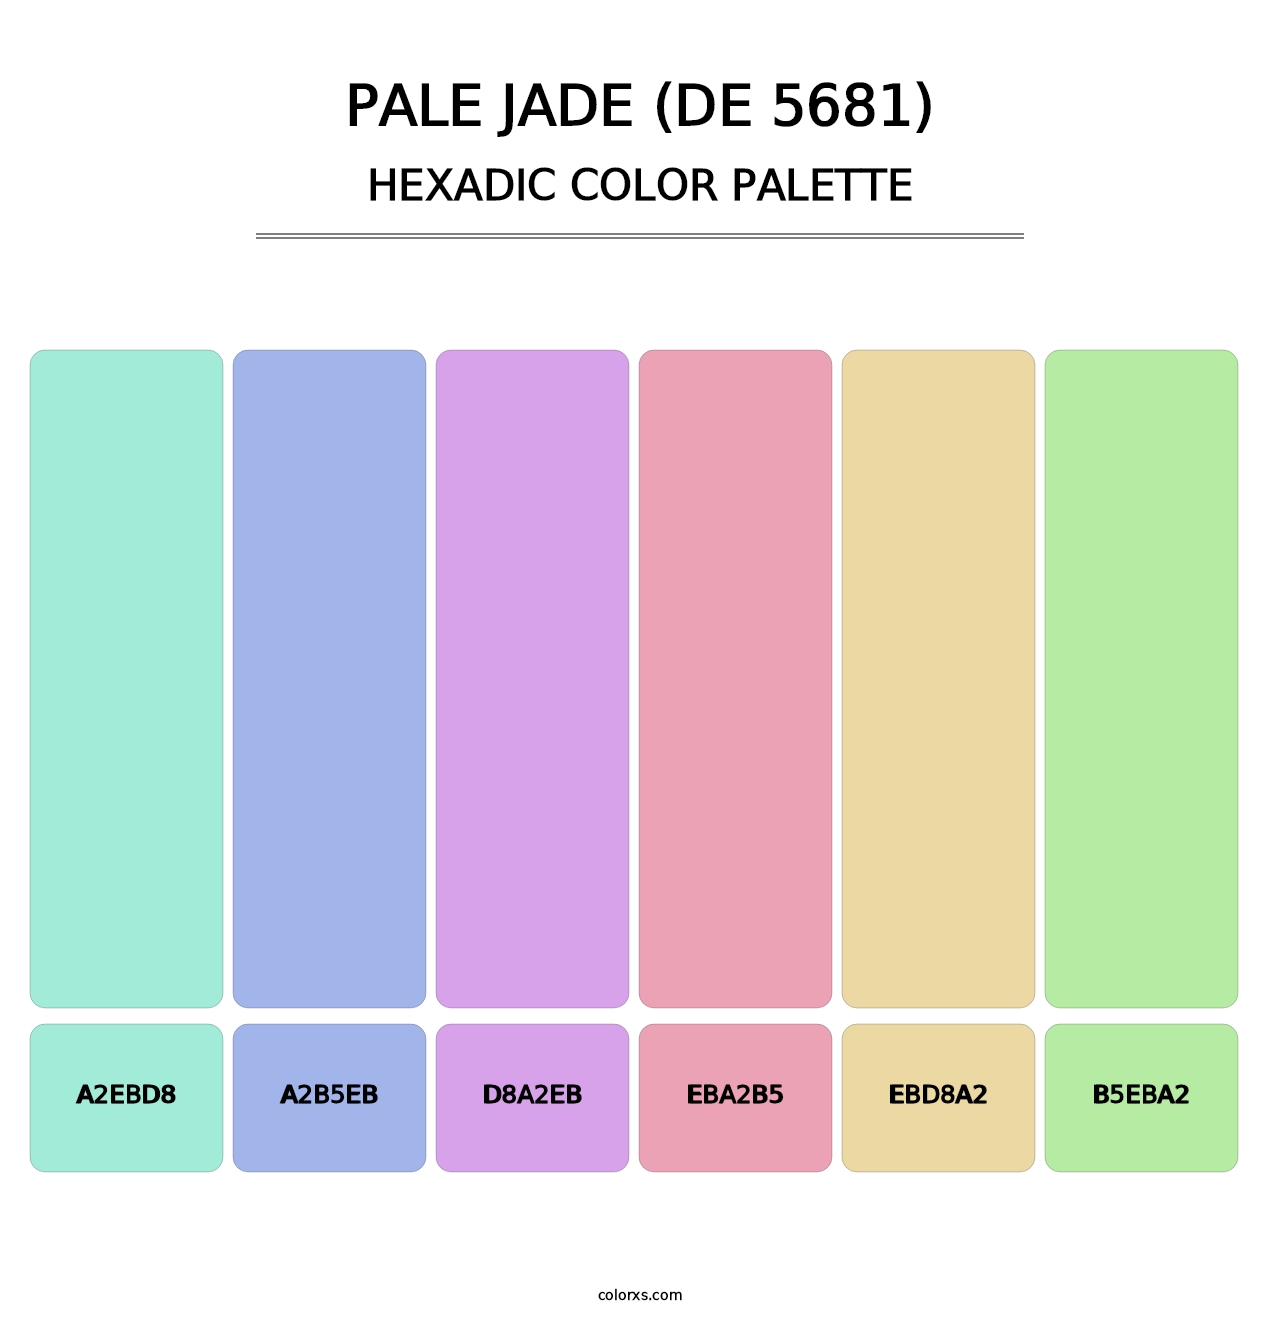 Pale Jade (DE 5681) - Hexadic Color Palette